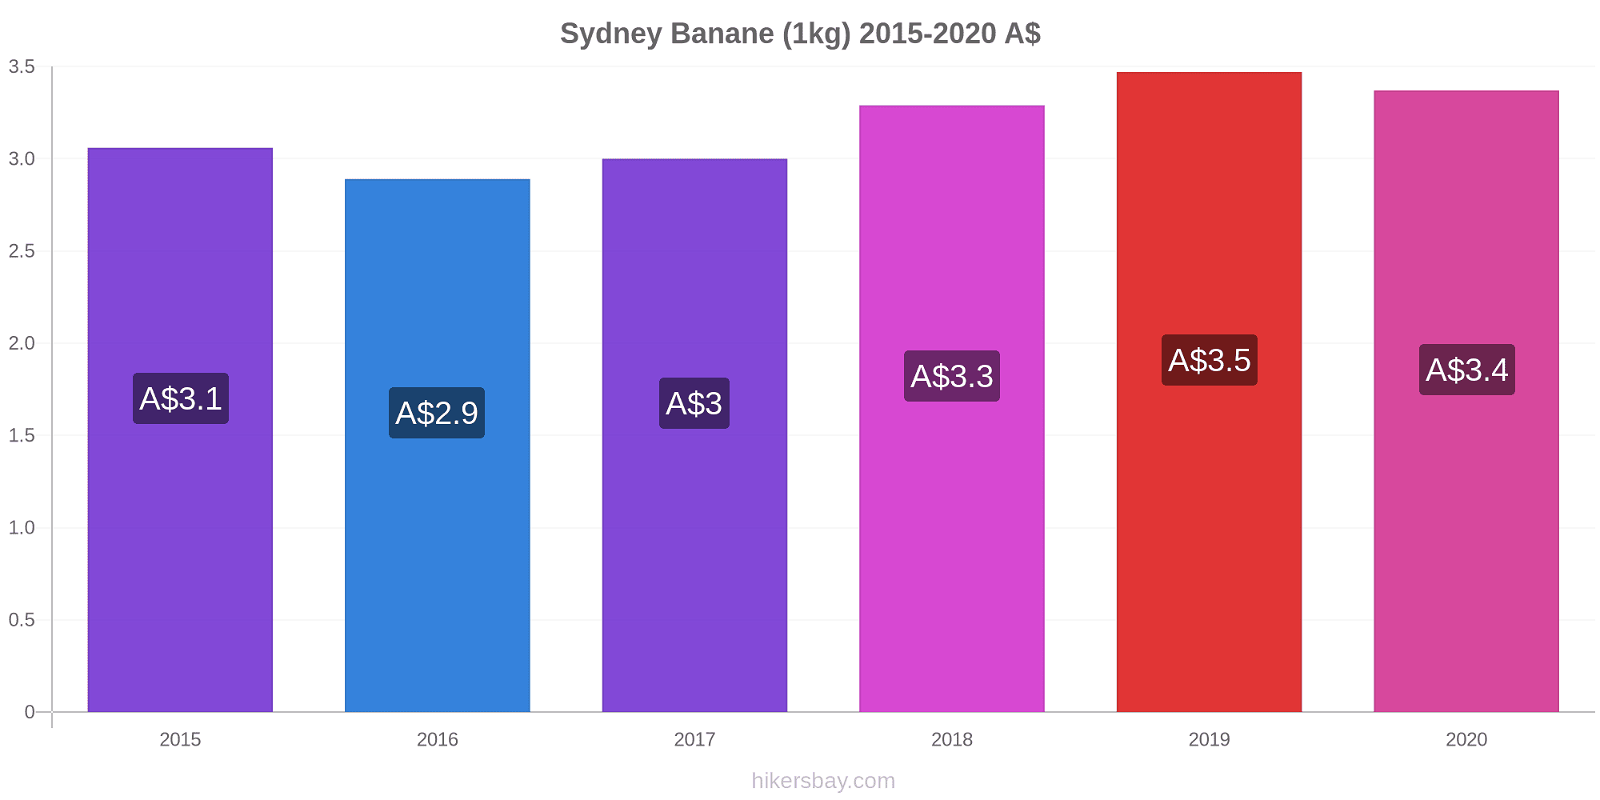 Sydney variazioni di prezzo Banana (1kg) hikersbay.com